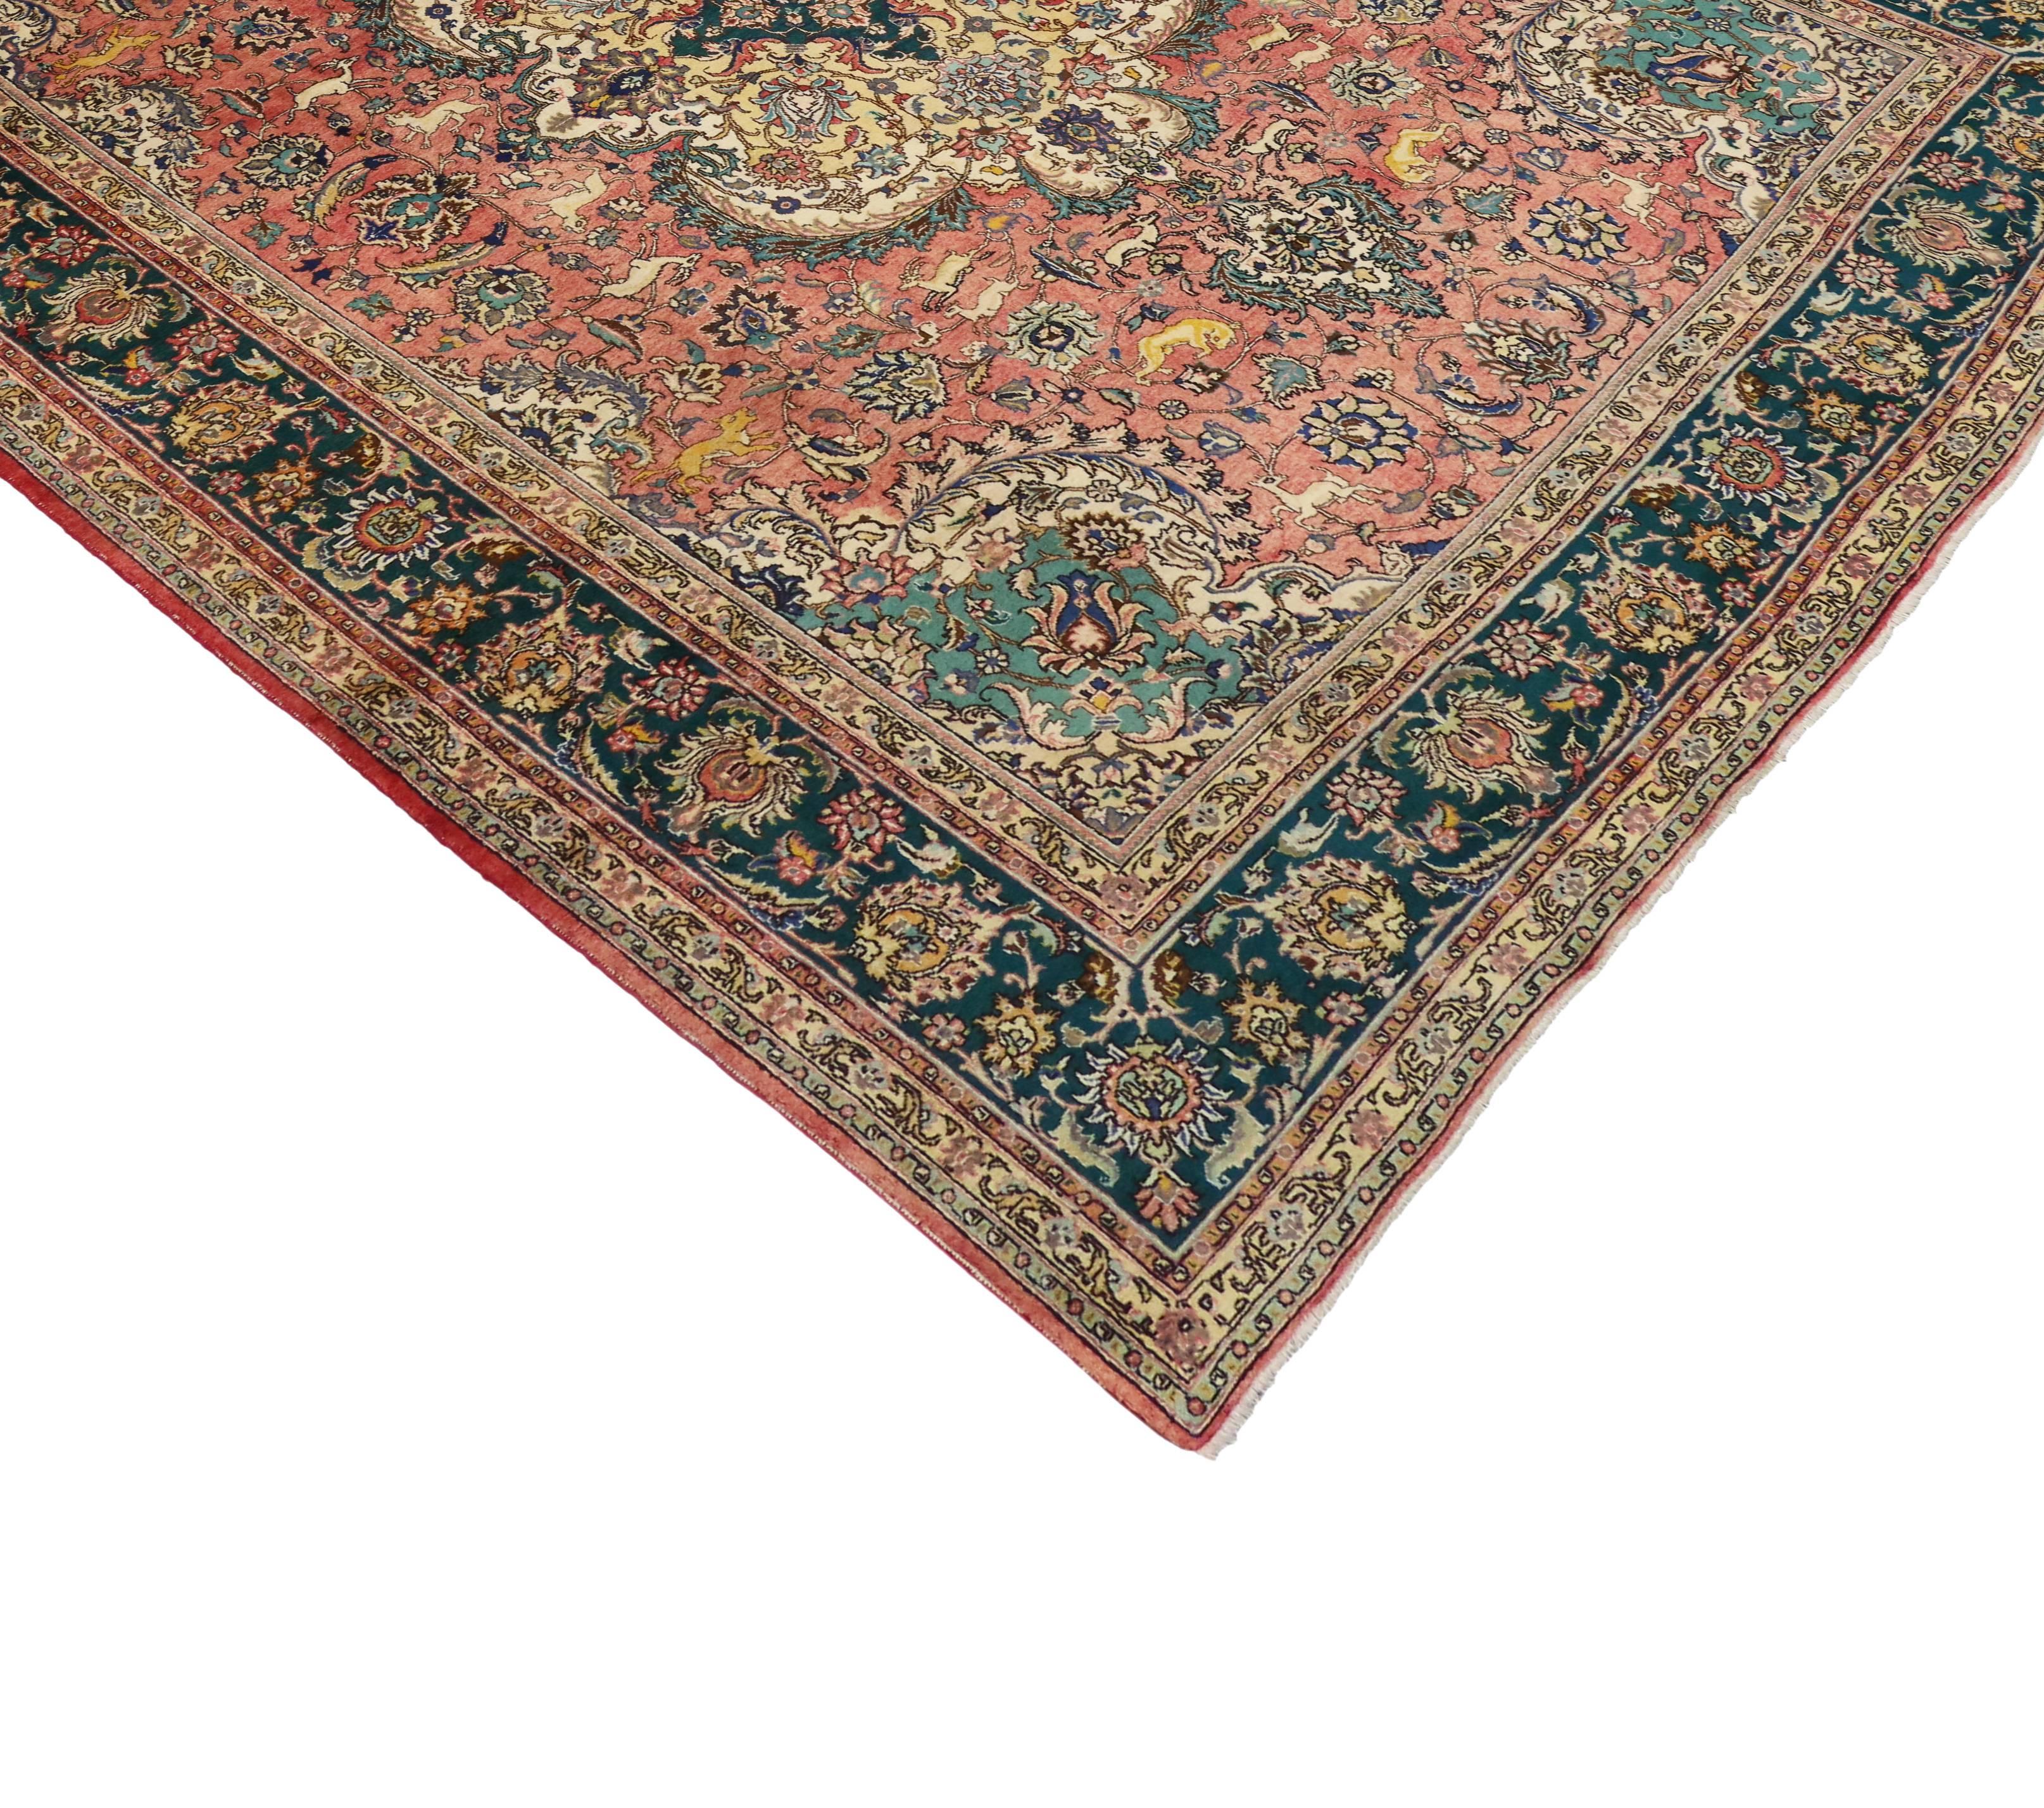 medieval carpet